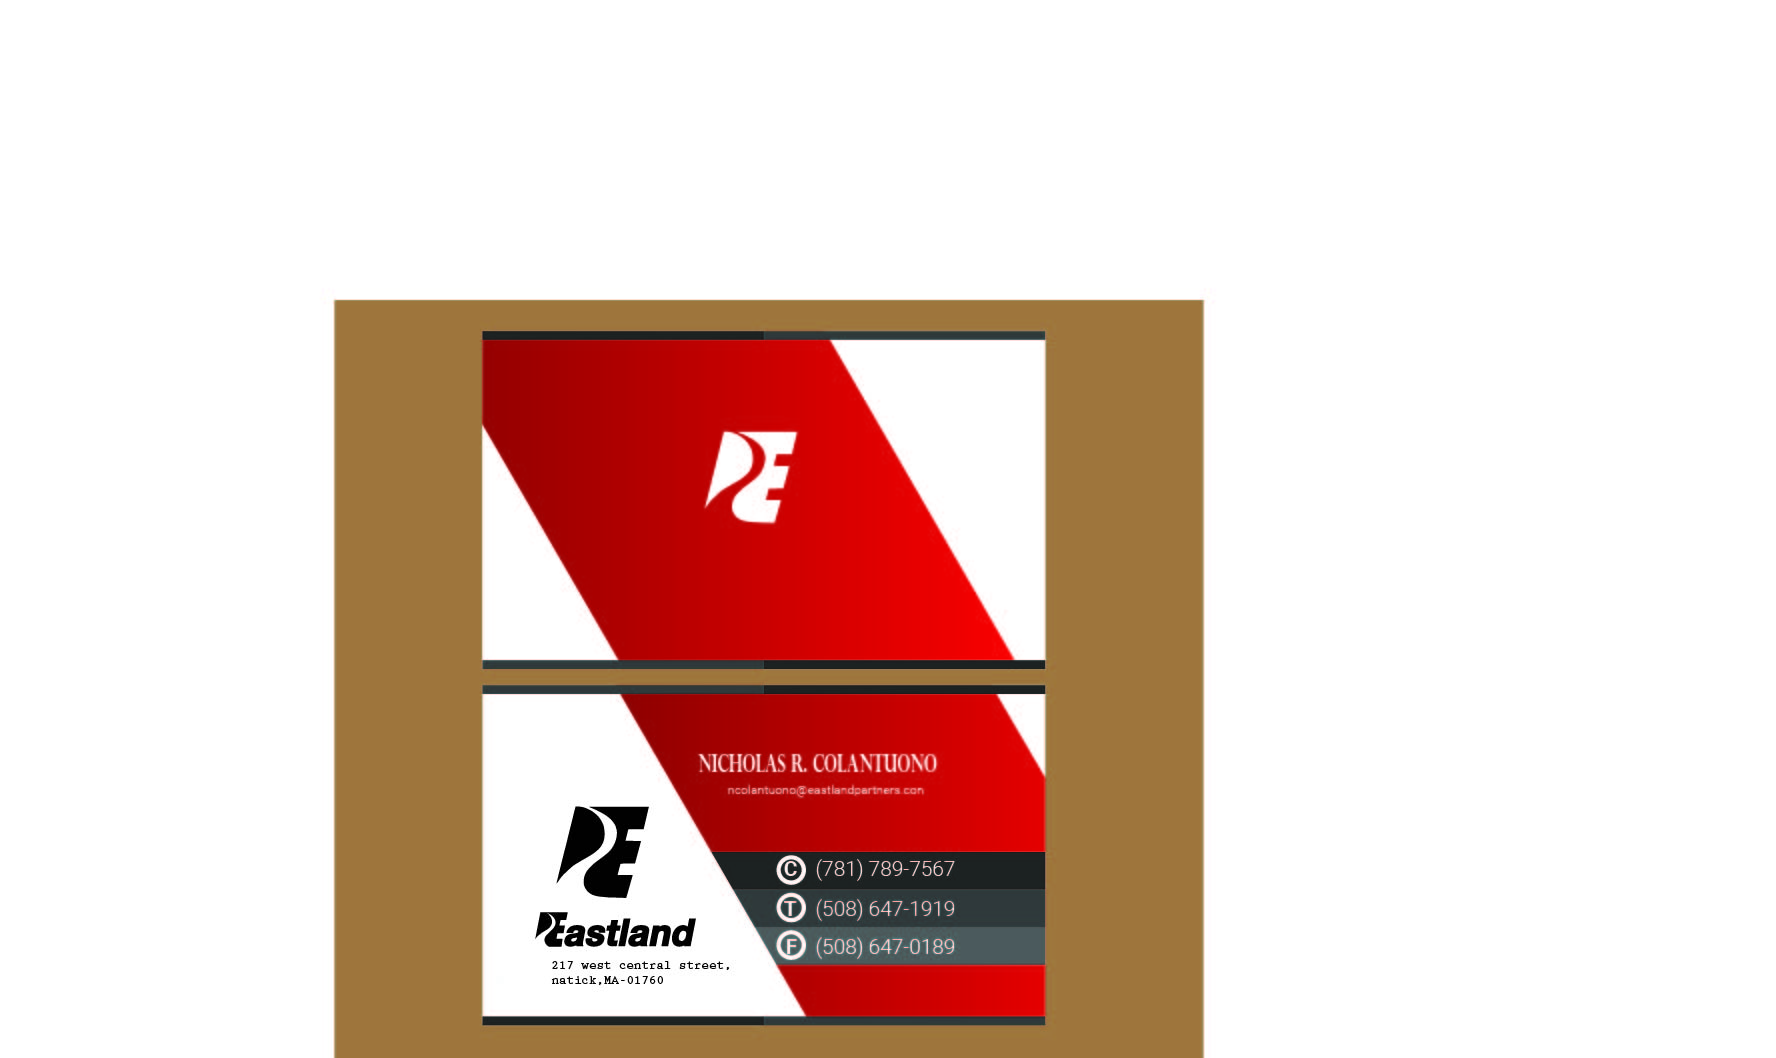 Business Card & Stationery Design entry 1336418 submitted by sjv27 to the Business Card & Stationery Design for Eastland Partners Inc.  run by eschollard